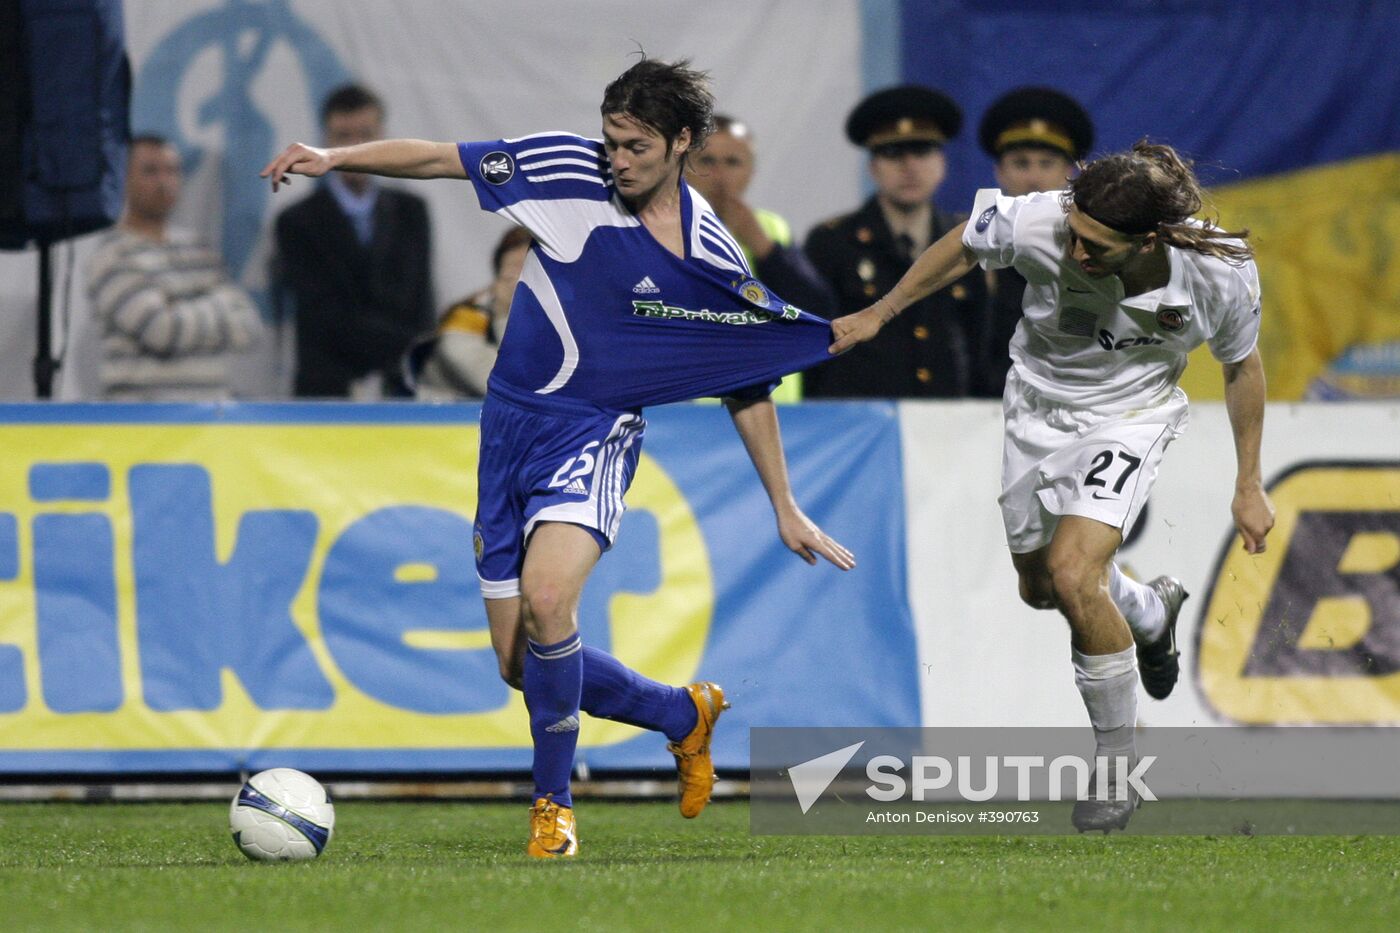 UEFA Cup semi-finals: Dynamo Kyiv vs. Shakhtar Donetsk